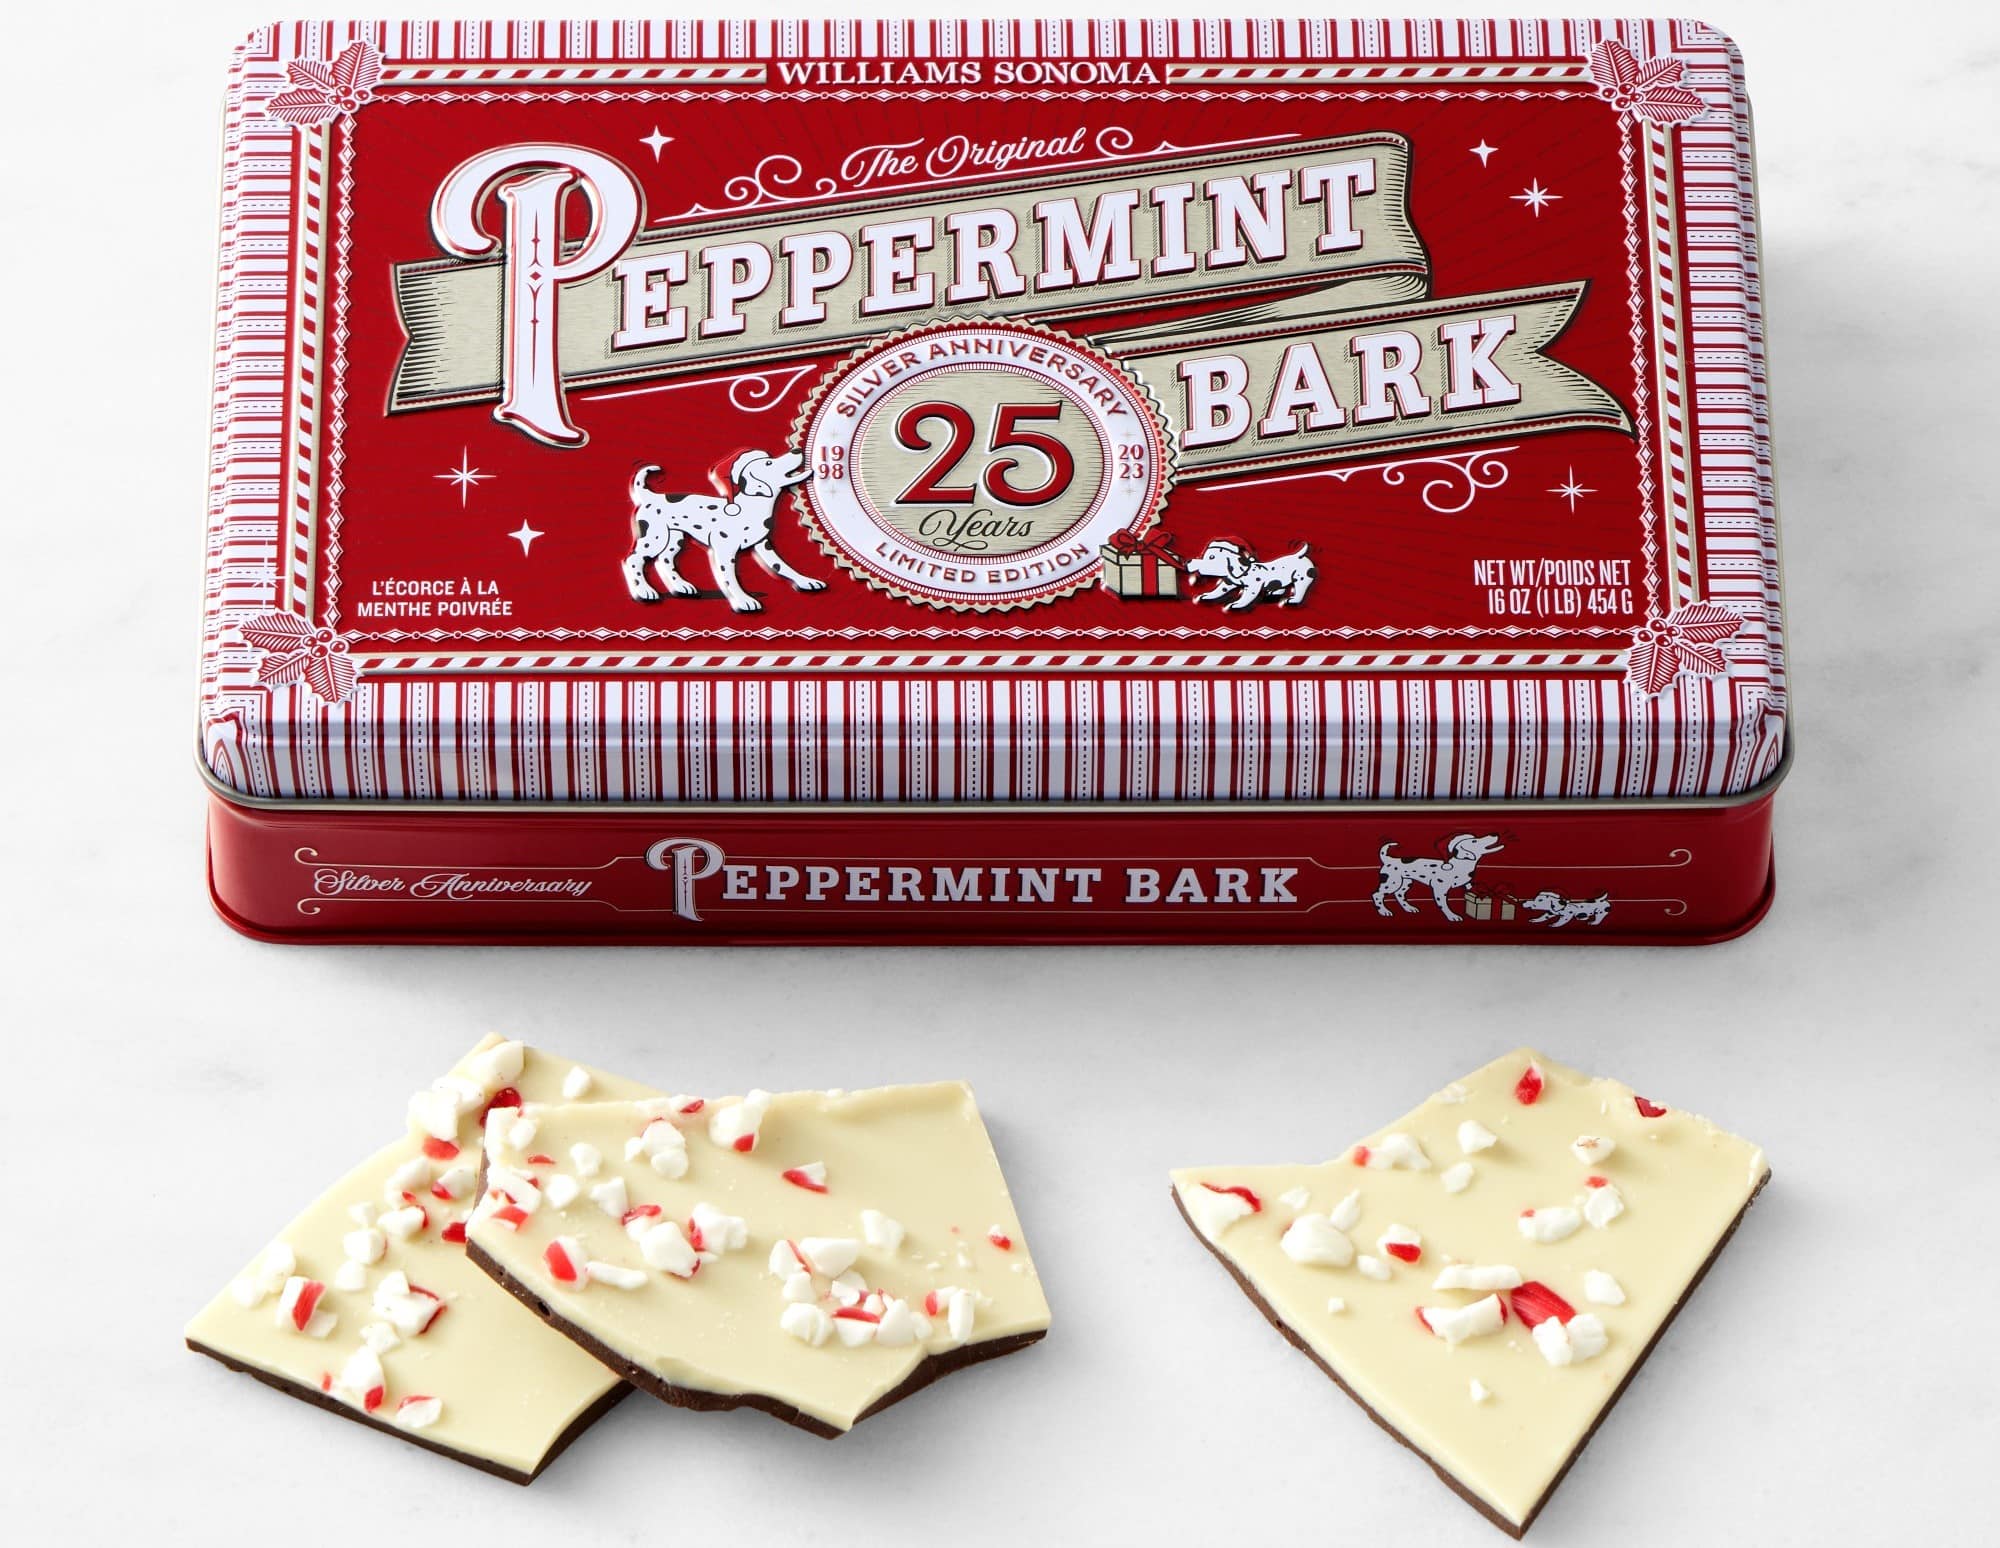 The Original Williams Sonoma Peppermint Bark